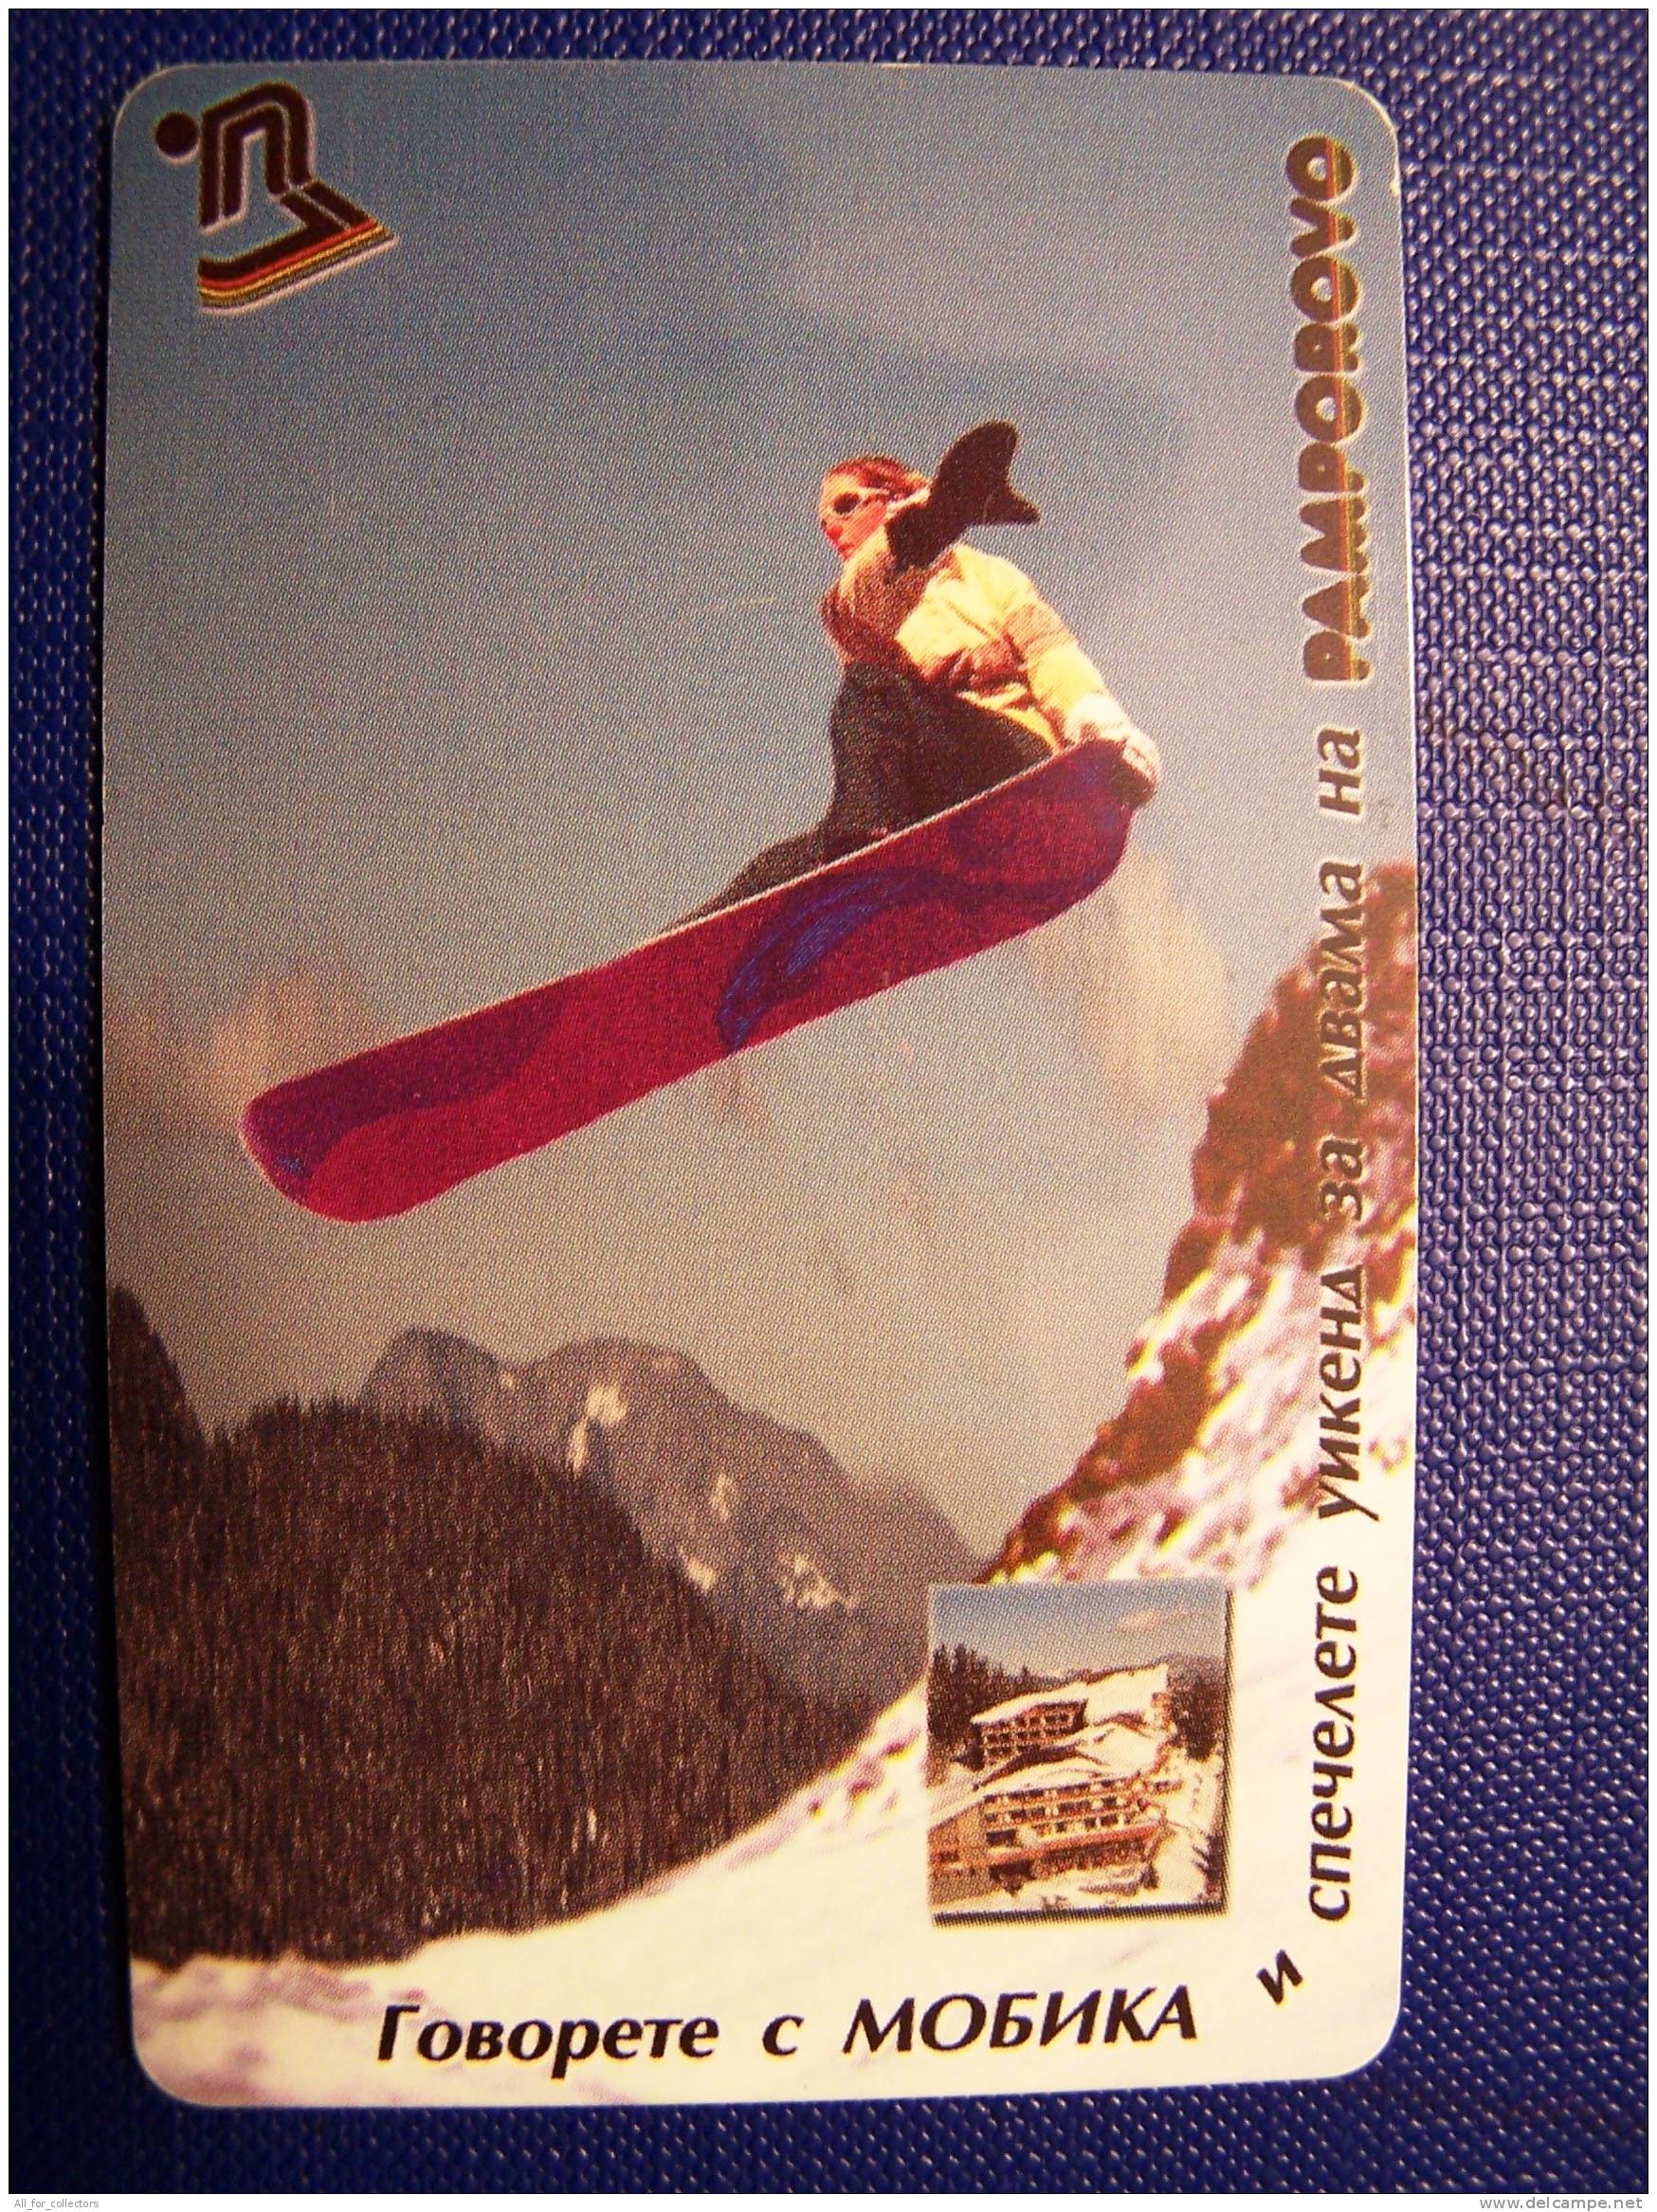 Mountains, Sport, Bulgaria Chip Phone Card, Mobika, Snowboard, - Montagne